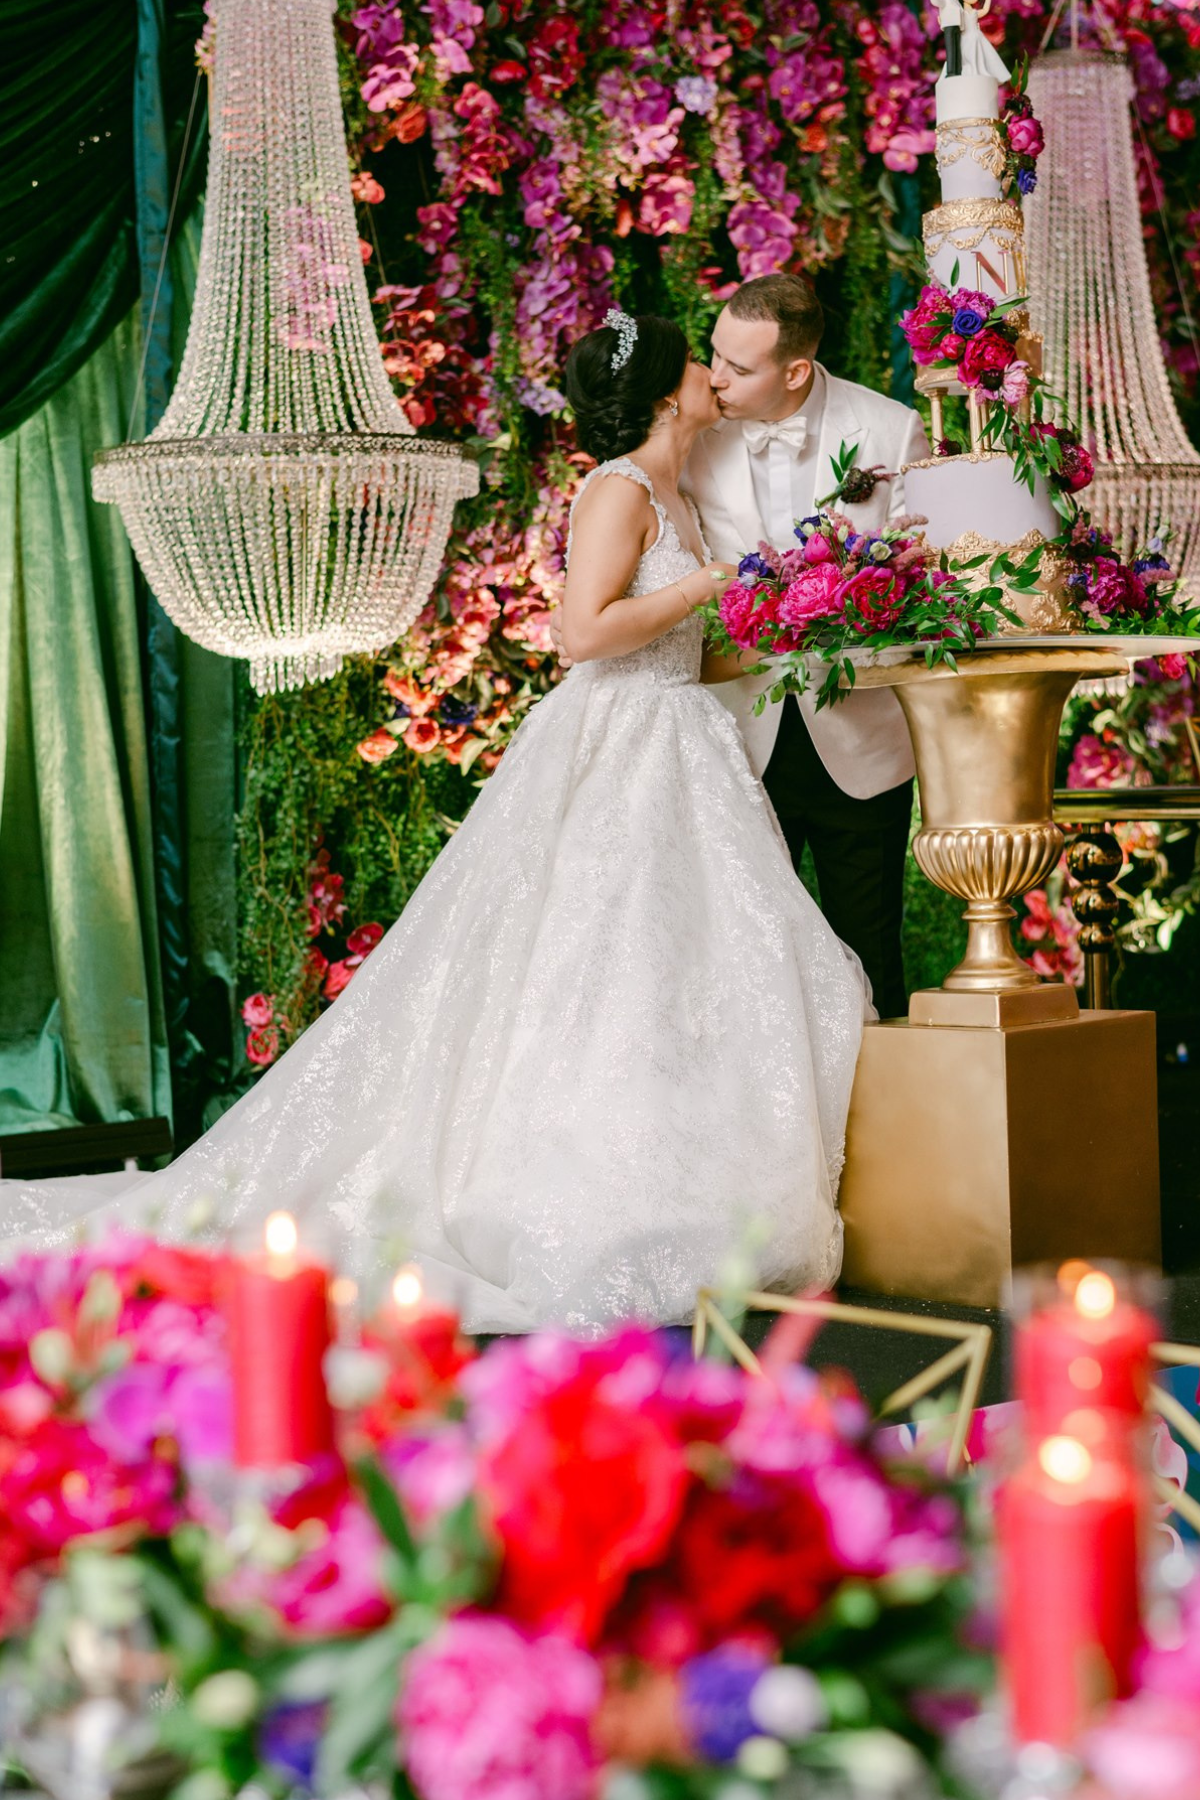 secret-garden-wedding-reception-greenery-pink-purple-gold-bride-groom-cake